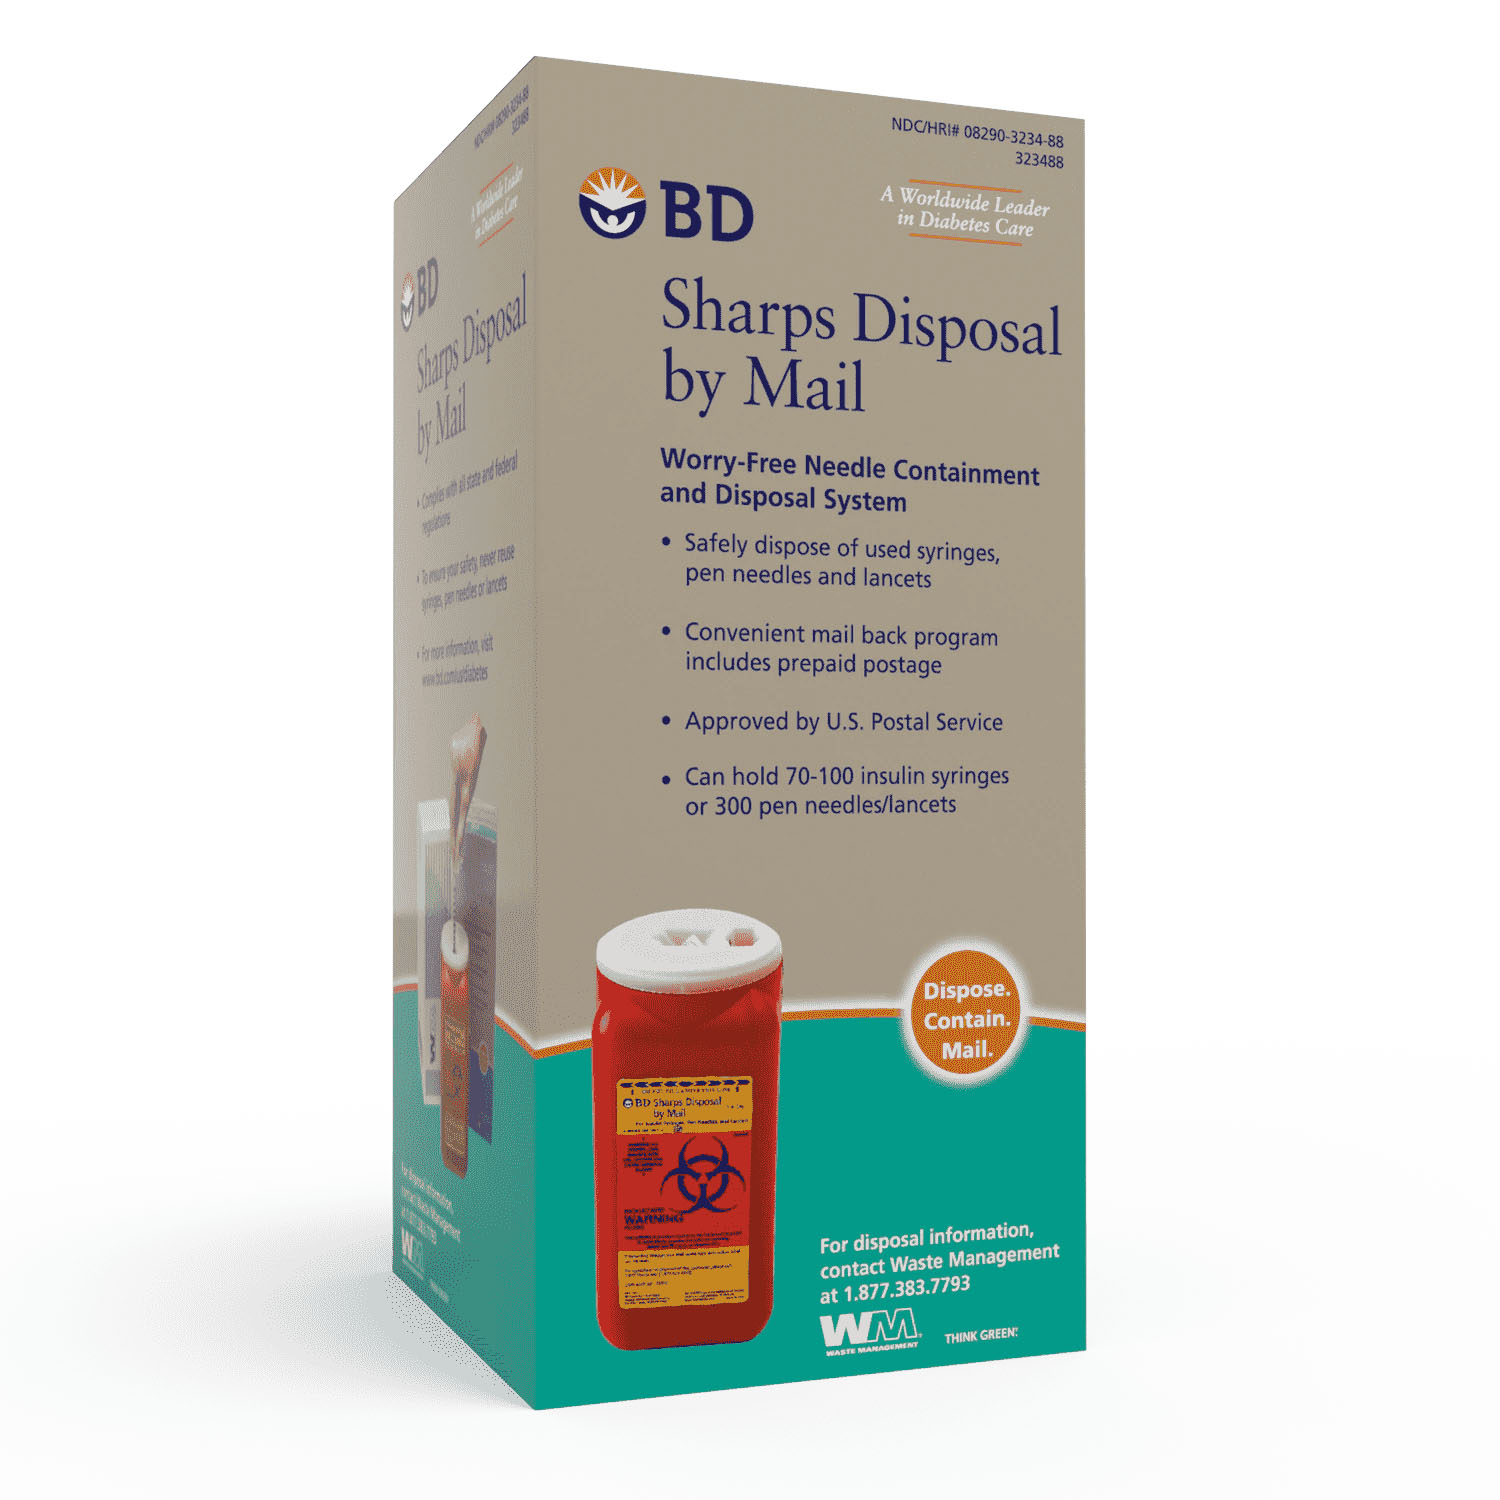 sharps-disposal-by-mail-323488_rc0_201195876.jpg